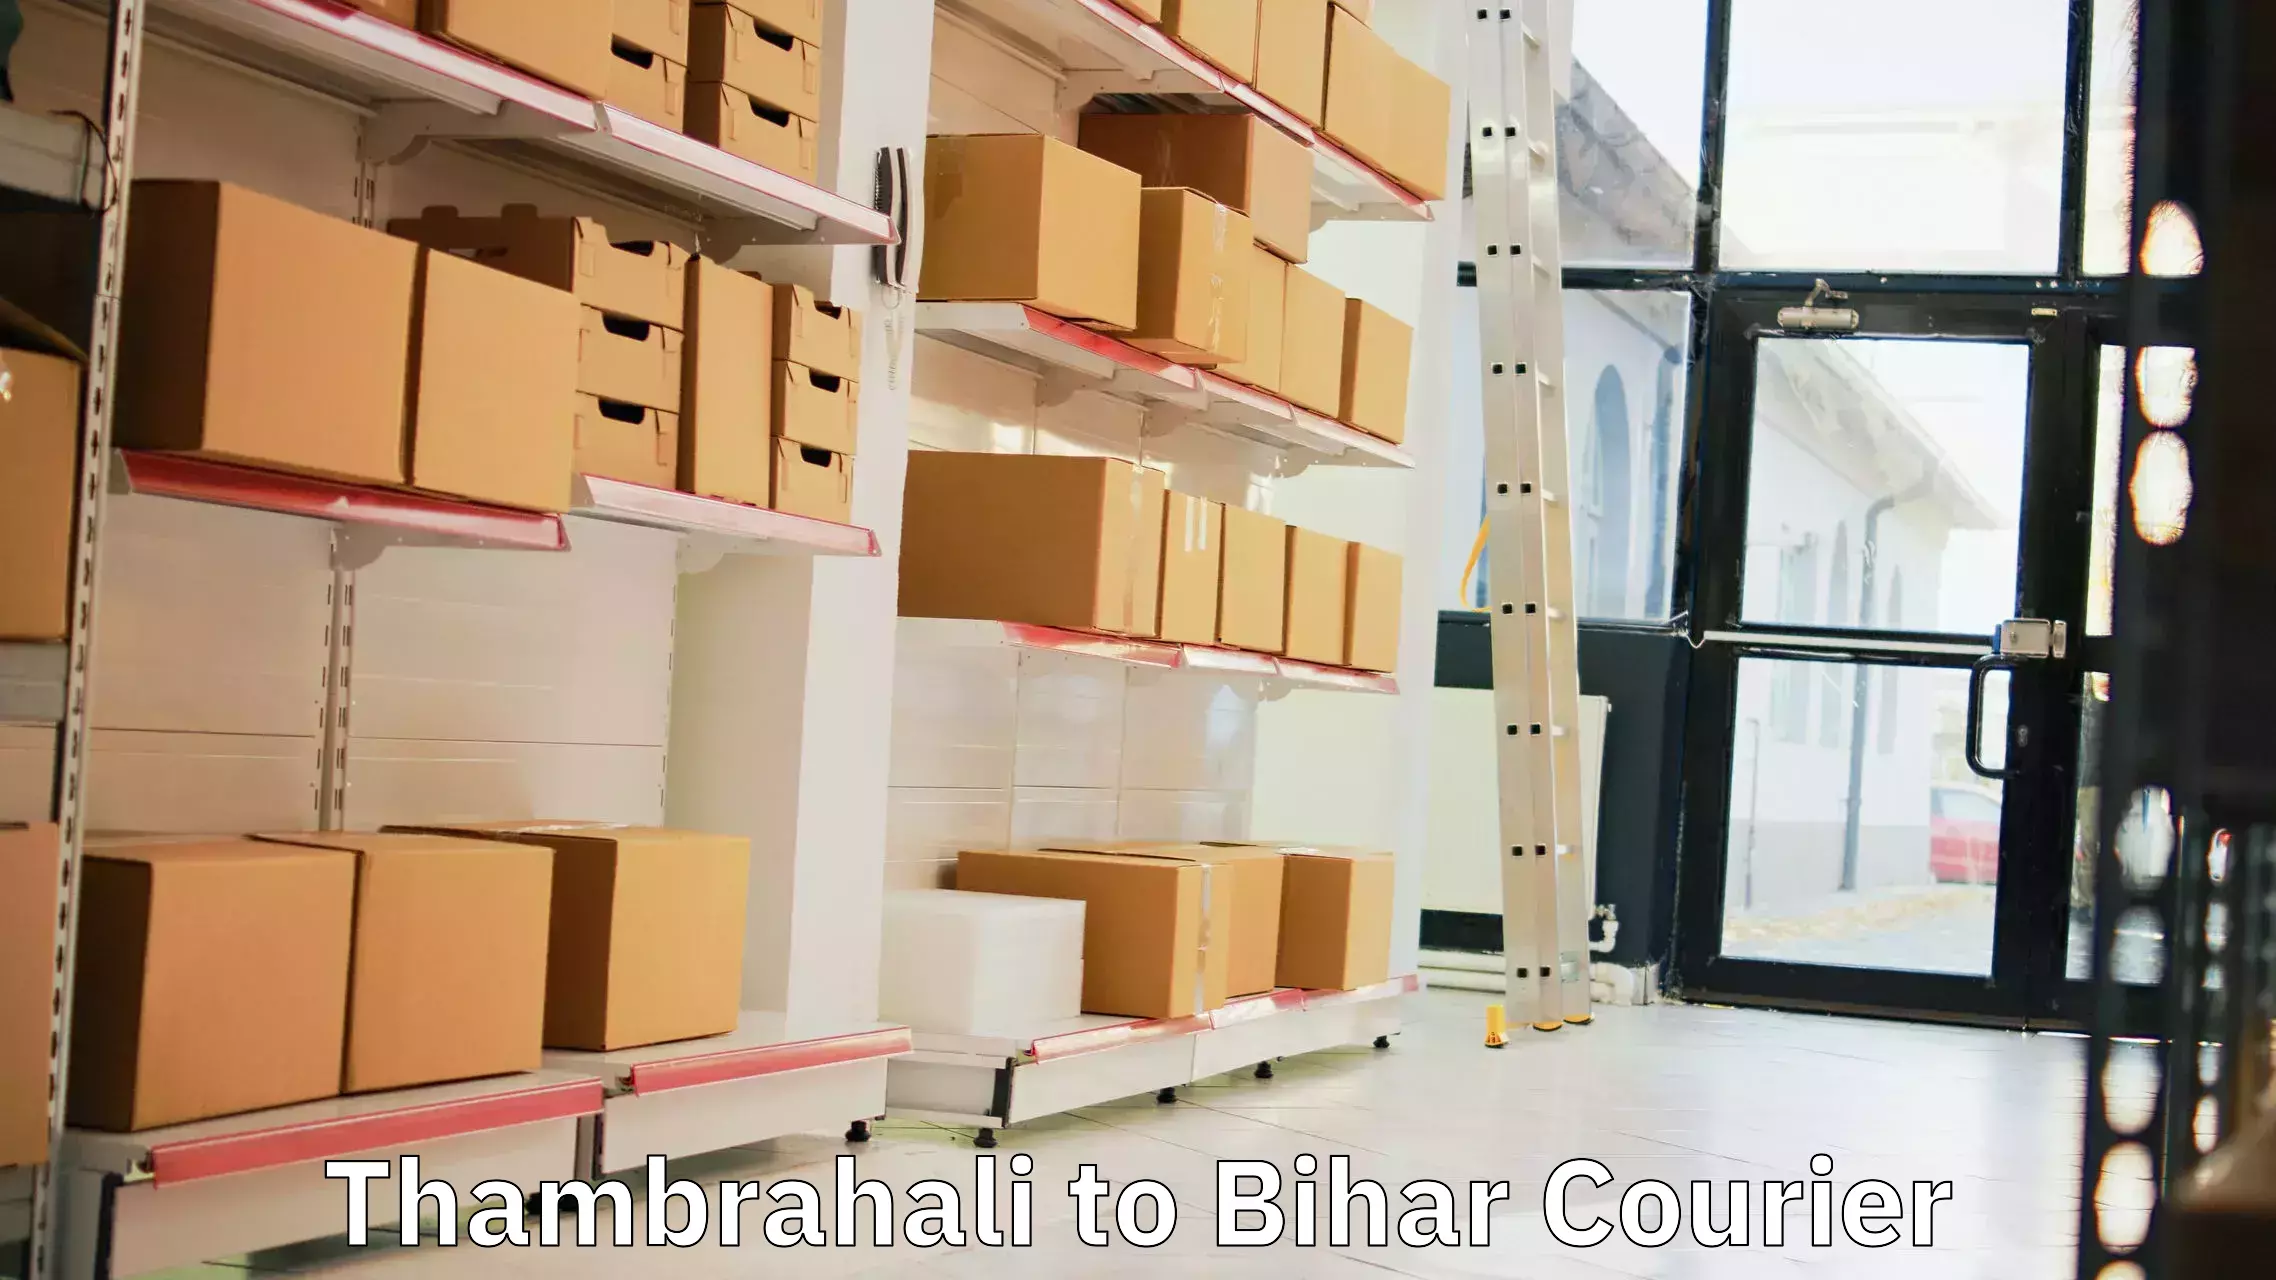 Courier service comparison Thambrahali to Lakhisarai